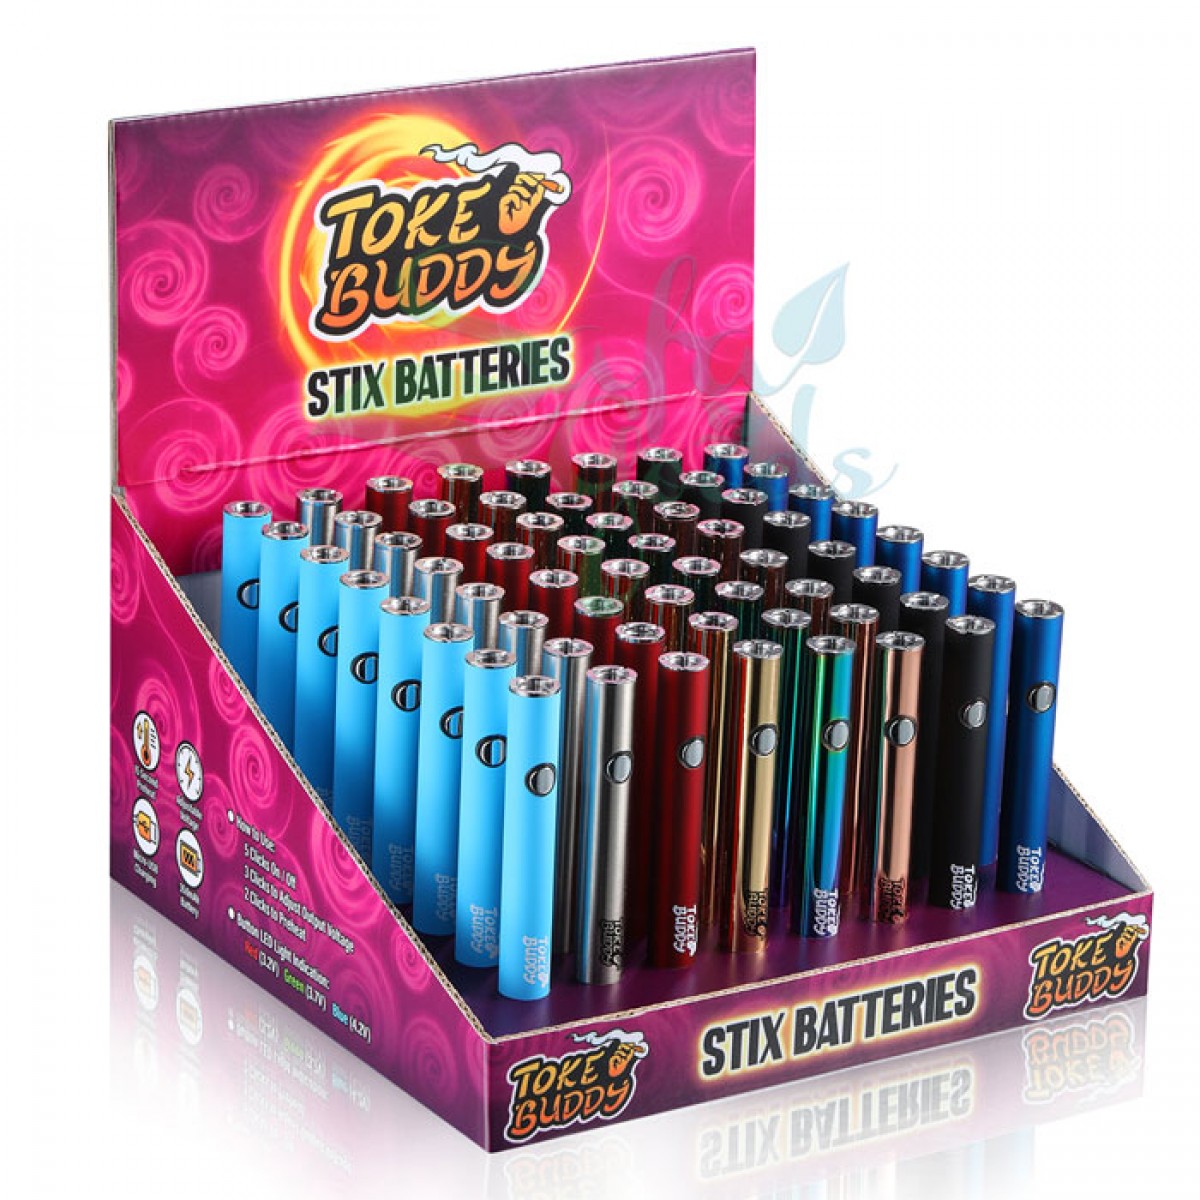 Toke Buddy - 510 Batteries - 64ct Display Box